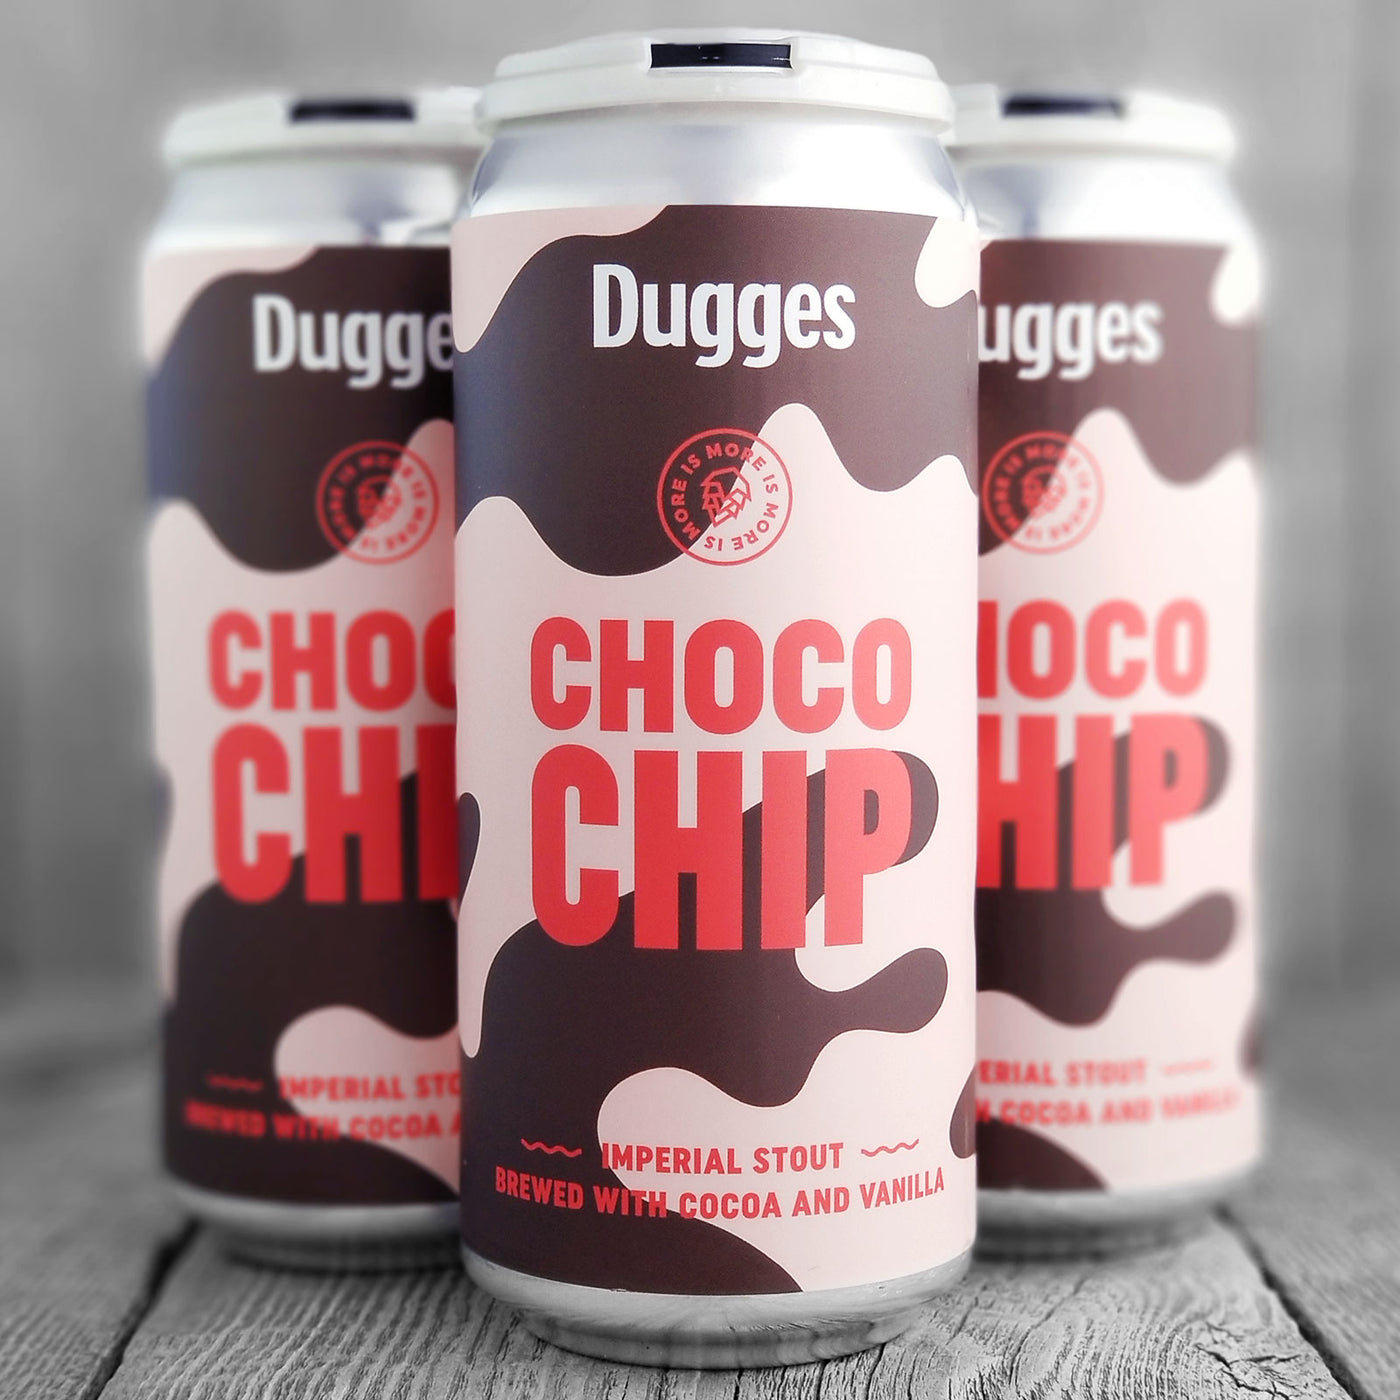 Dugges Choco Chip